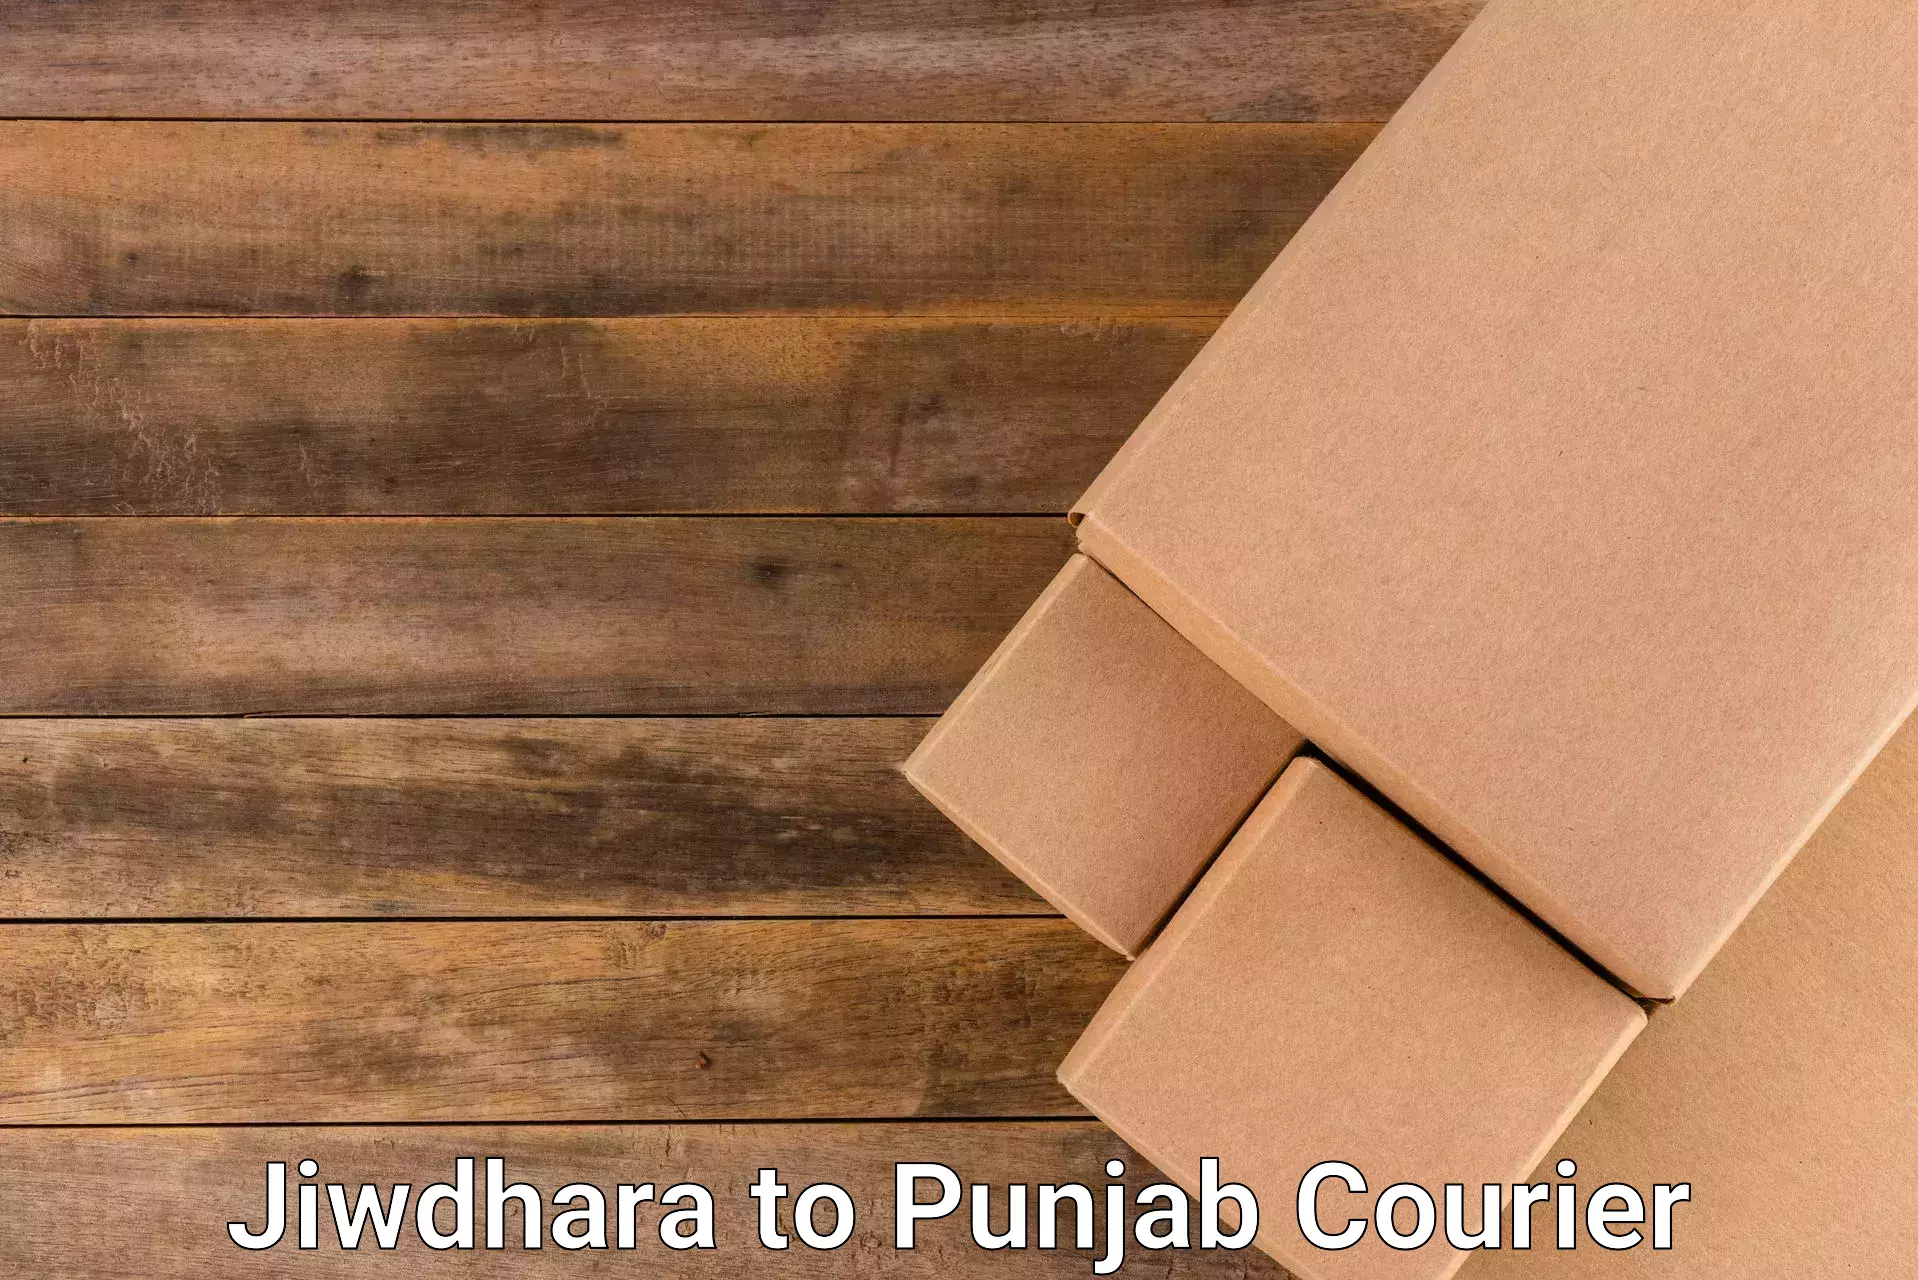 Professional courier handling in Jiwdhara to Nawanshahr